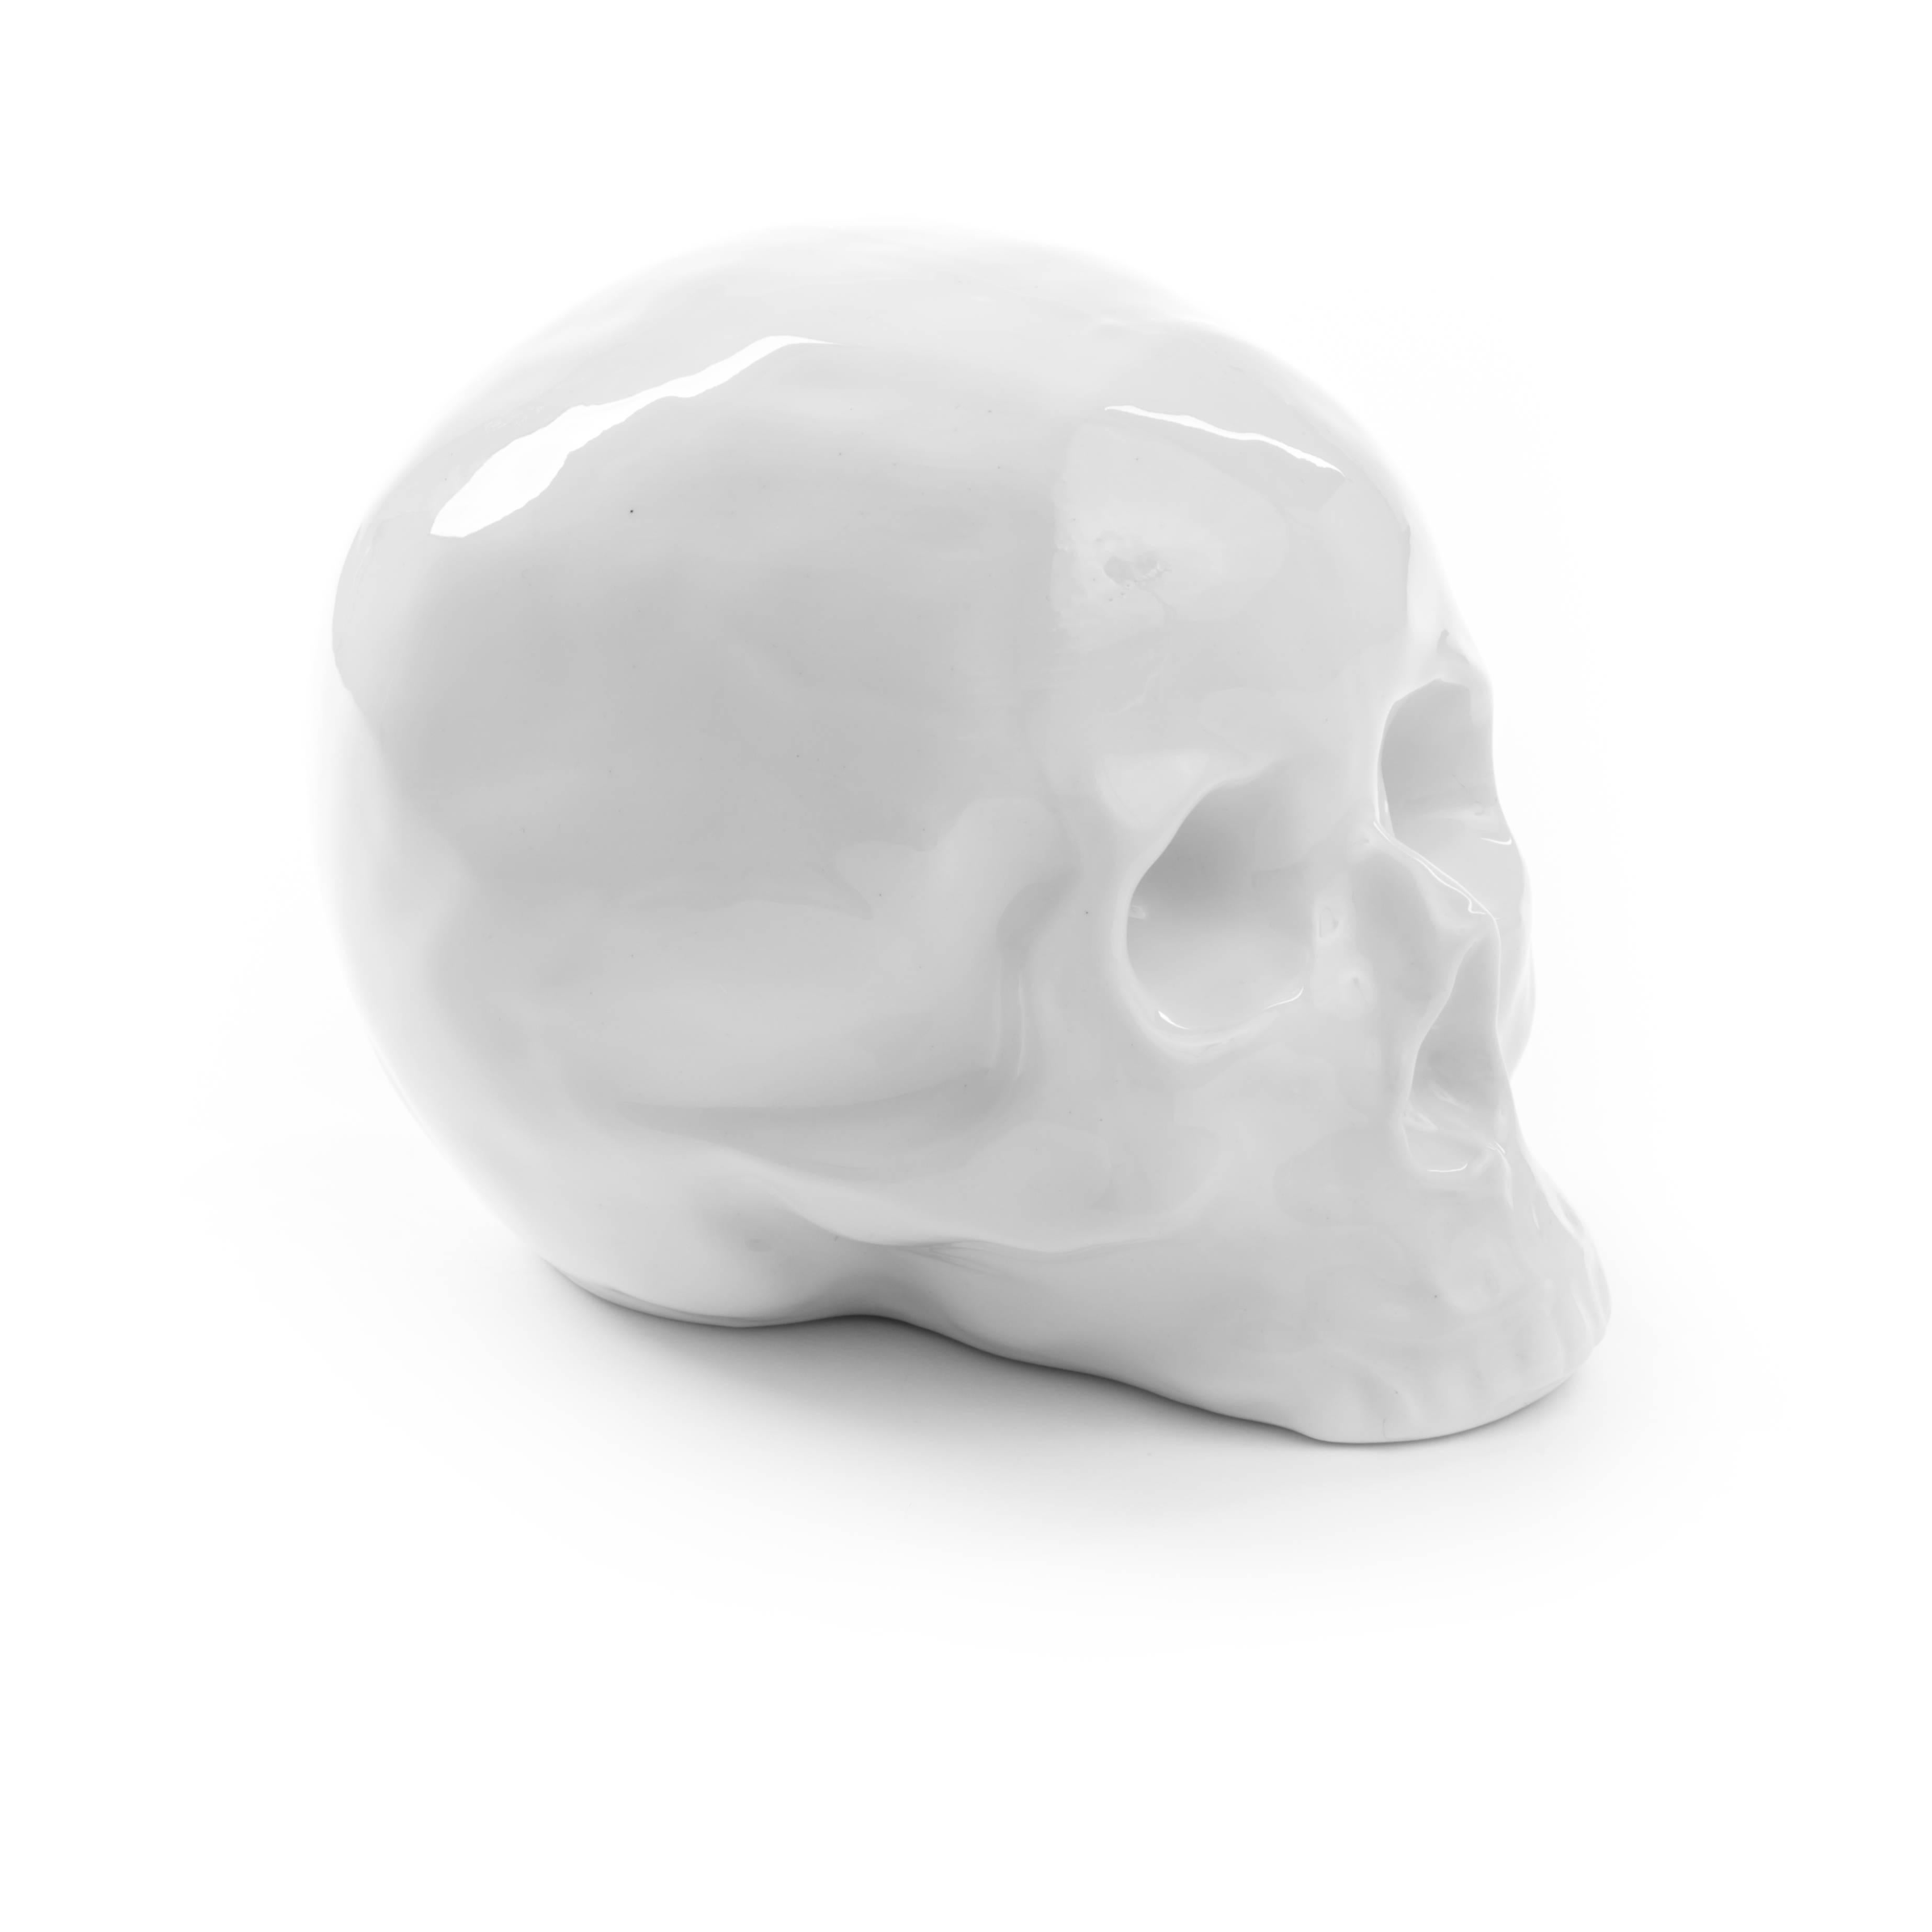 Chinois Porcelaine « Memorabilia » de Seletti « My Skull » en vente